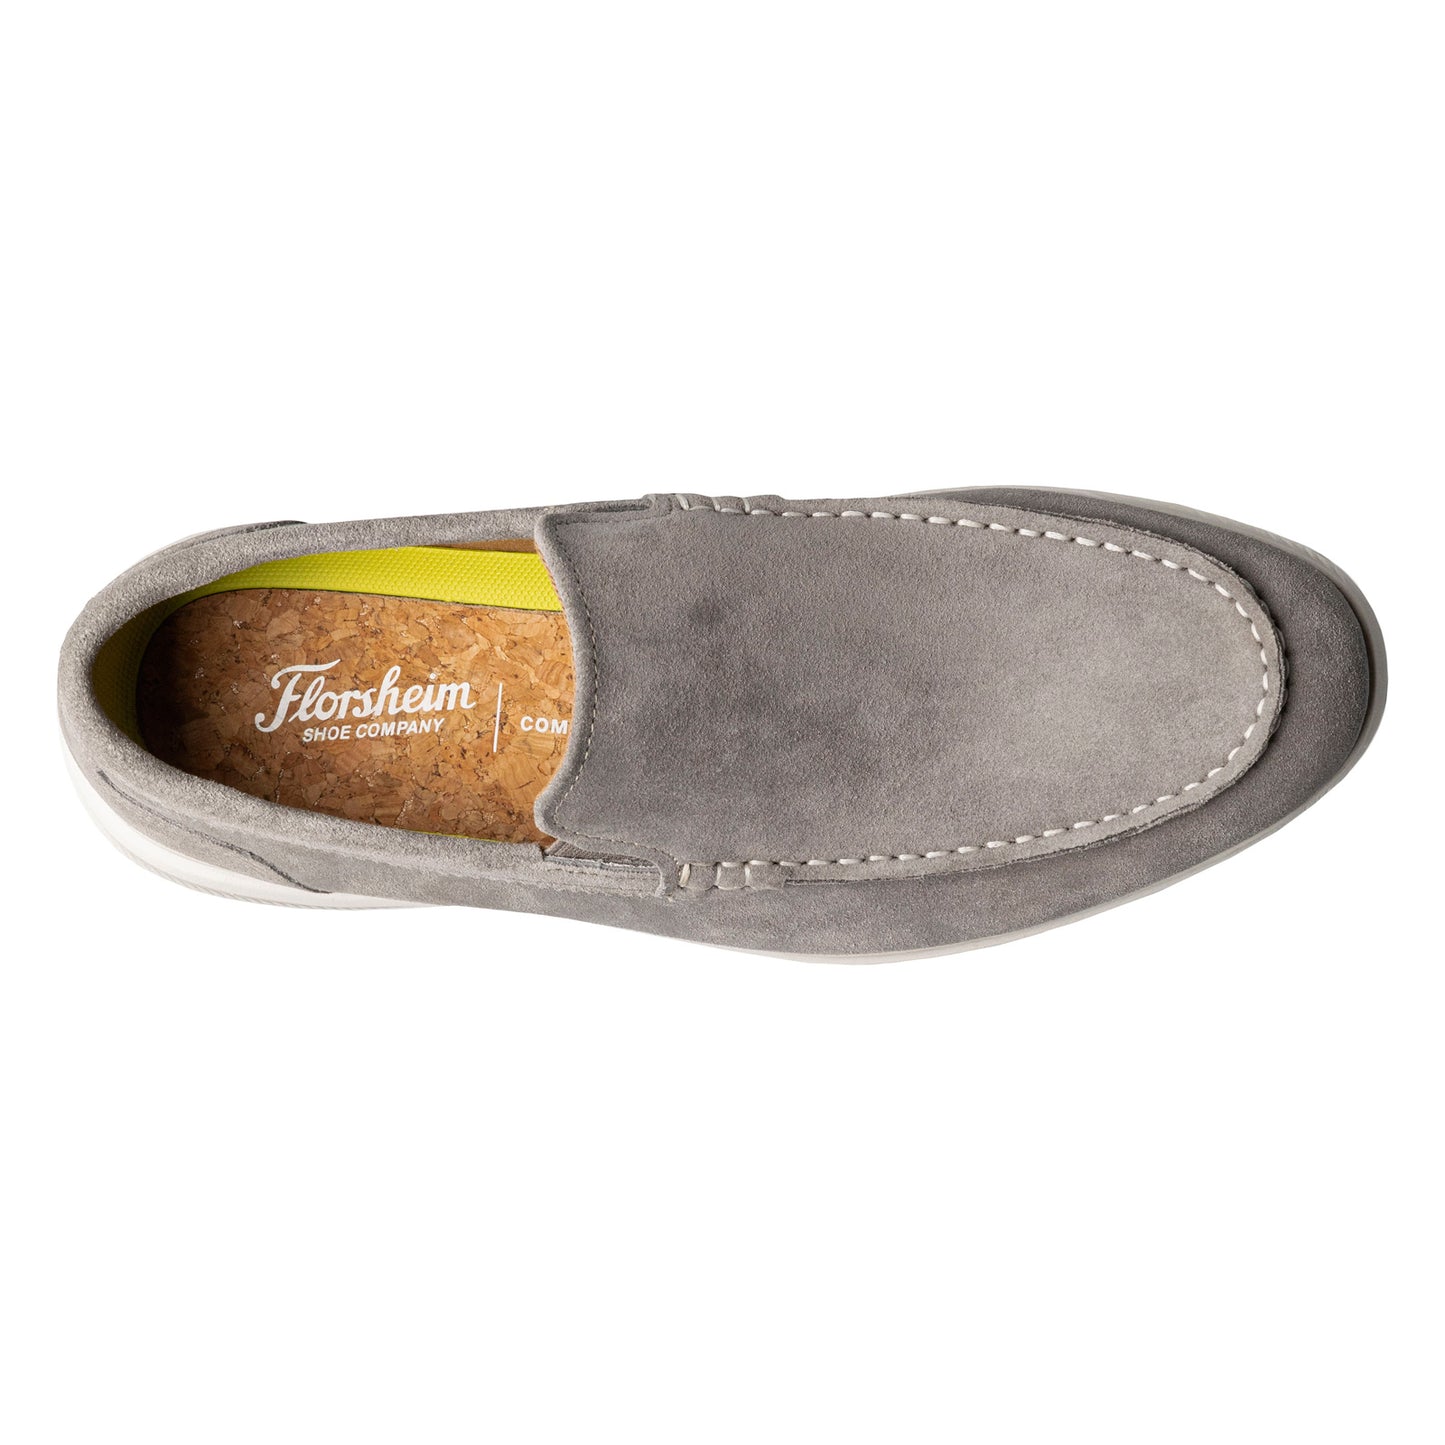 Peltz Shoes  Men's Florsheim Hamptons Moc Toe Venetian Loafer GREY SUEDE 14397-061